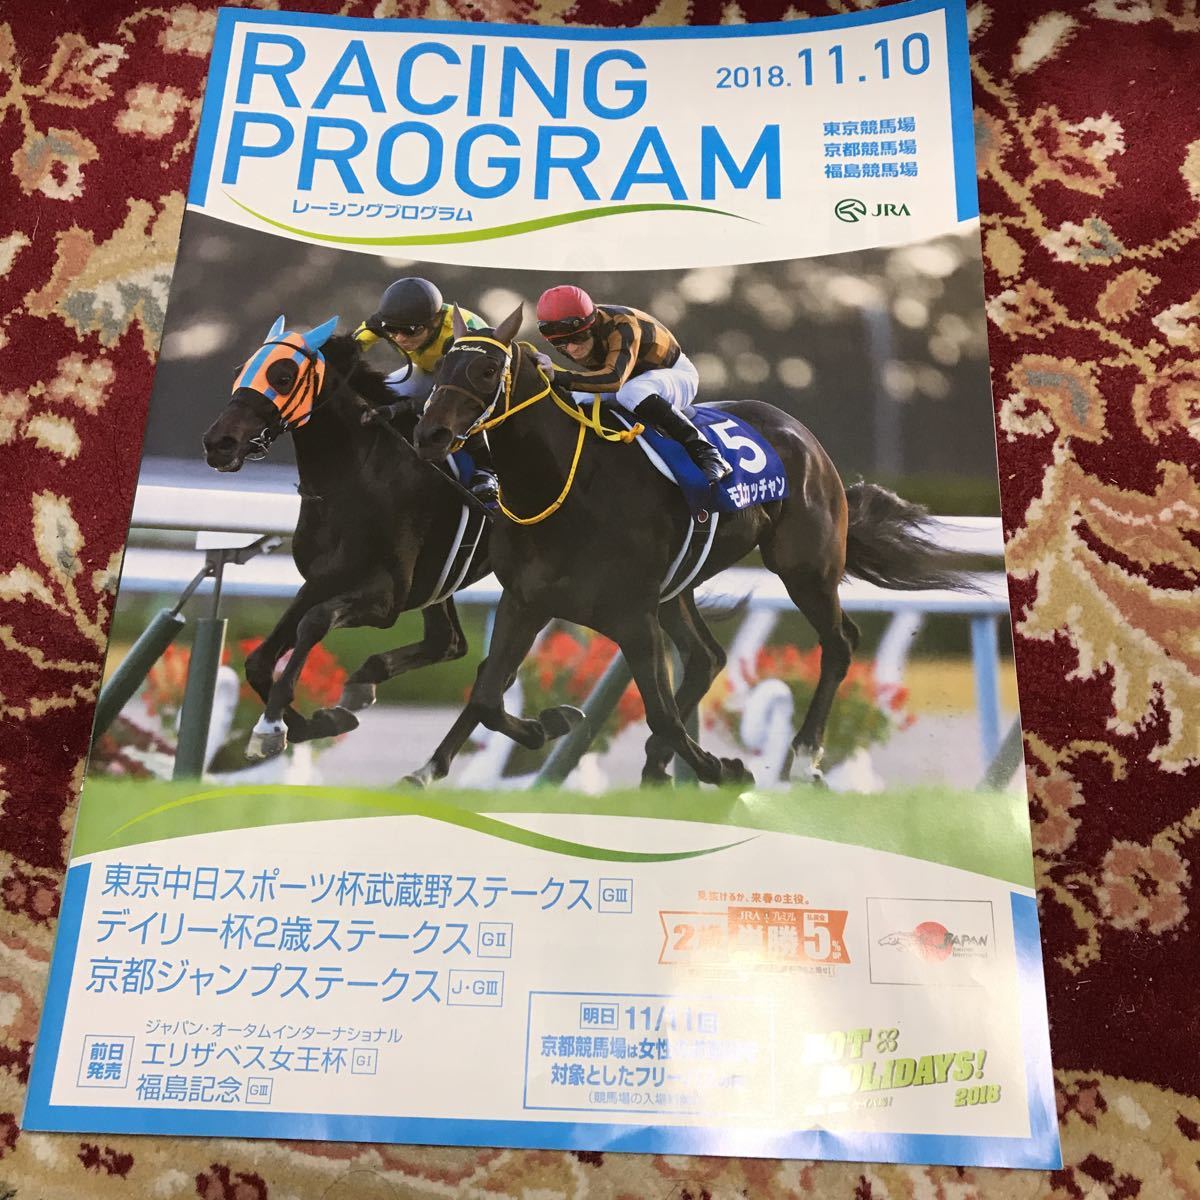 JRA Racing Program 2018.11.10,. warehouse . stay ks(GⅢ),tei Lee cup 2 -years old stay ks(GⅡ), Kyoto Jump stay ks(J*GⅢ)